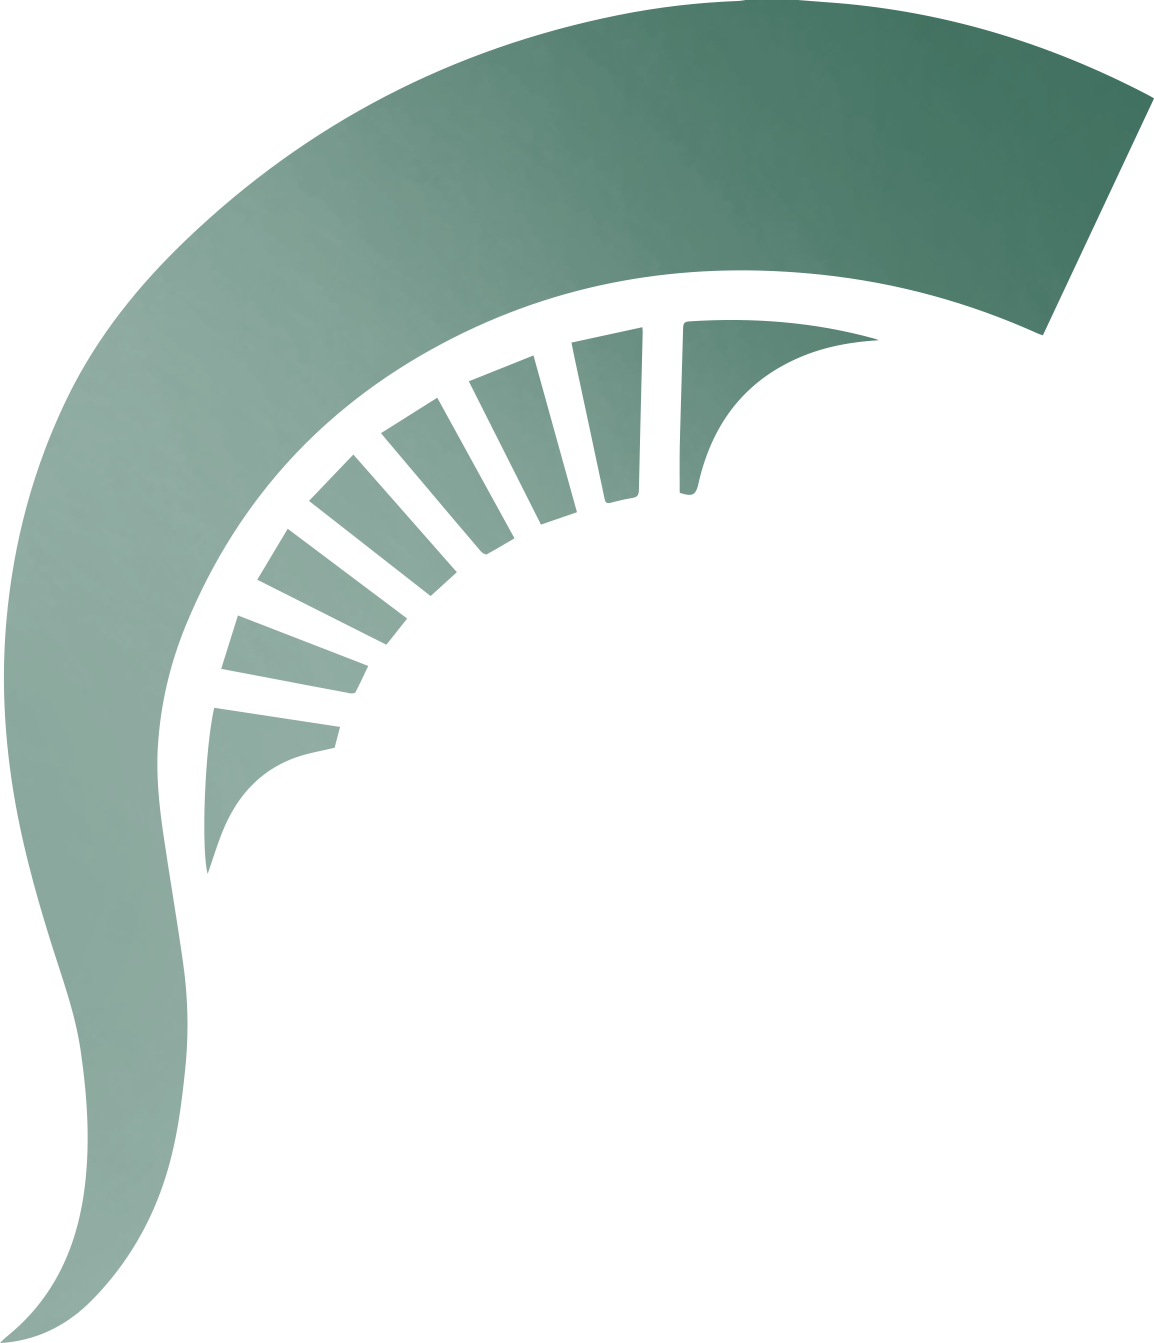 Michigan State Spartans Logo - Design and Visual Identity | The MSU Brand | Michigan State University